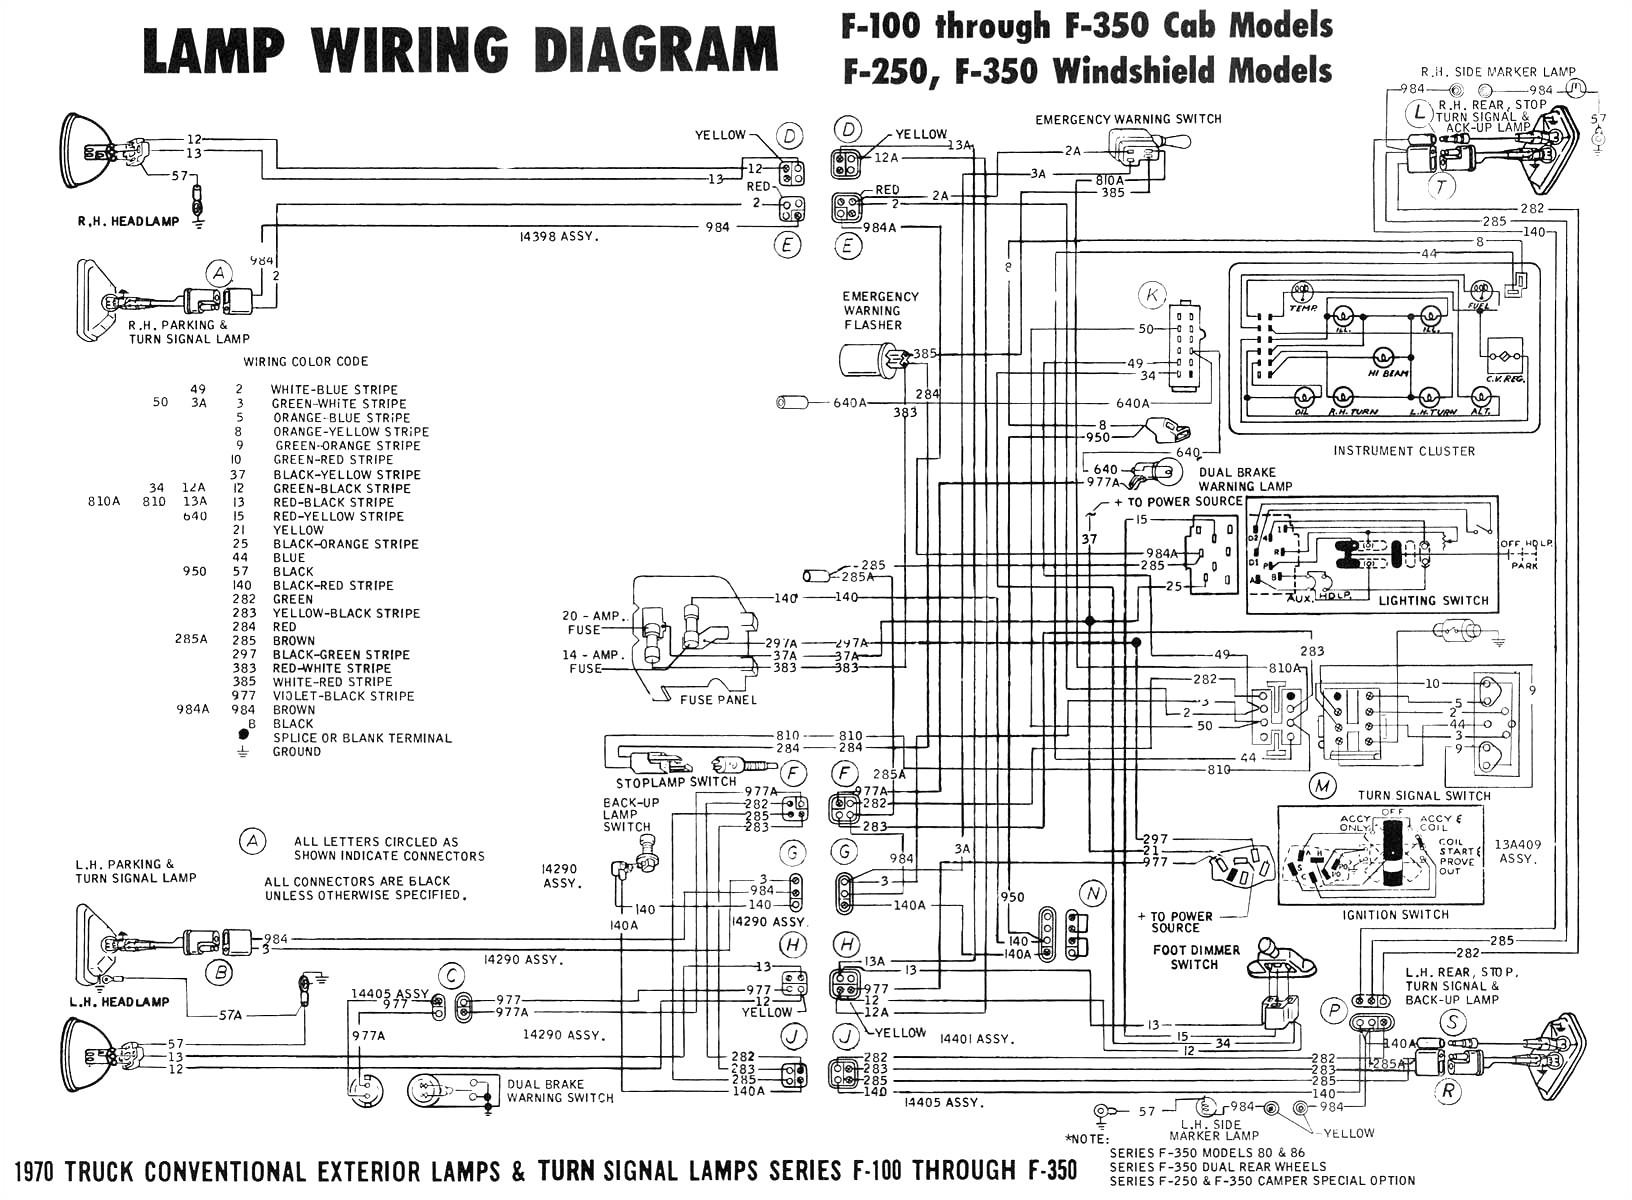 2004 ford f 250 wiring diagram wiring diagram name 04 honda 250 ignition wiring